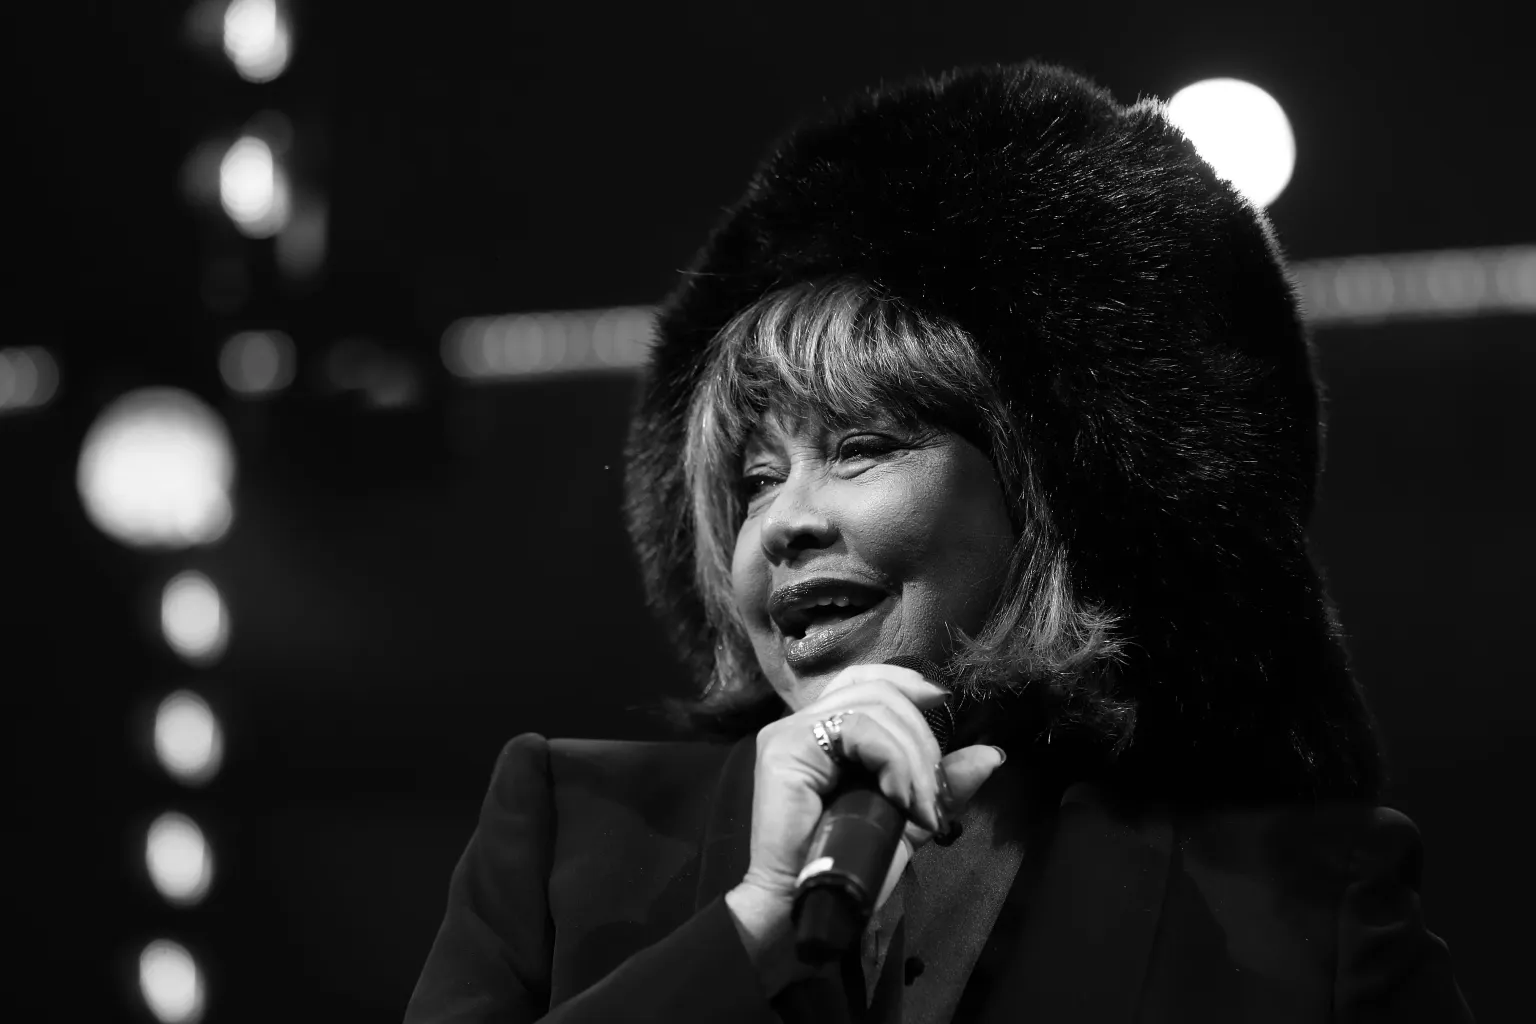 GettyImages-1128577228 Cantora Tina Turner, a rainha do rock ‘n’ roll, morre aos 83 anos